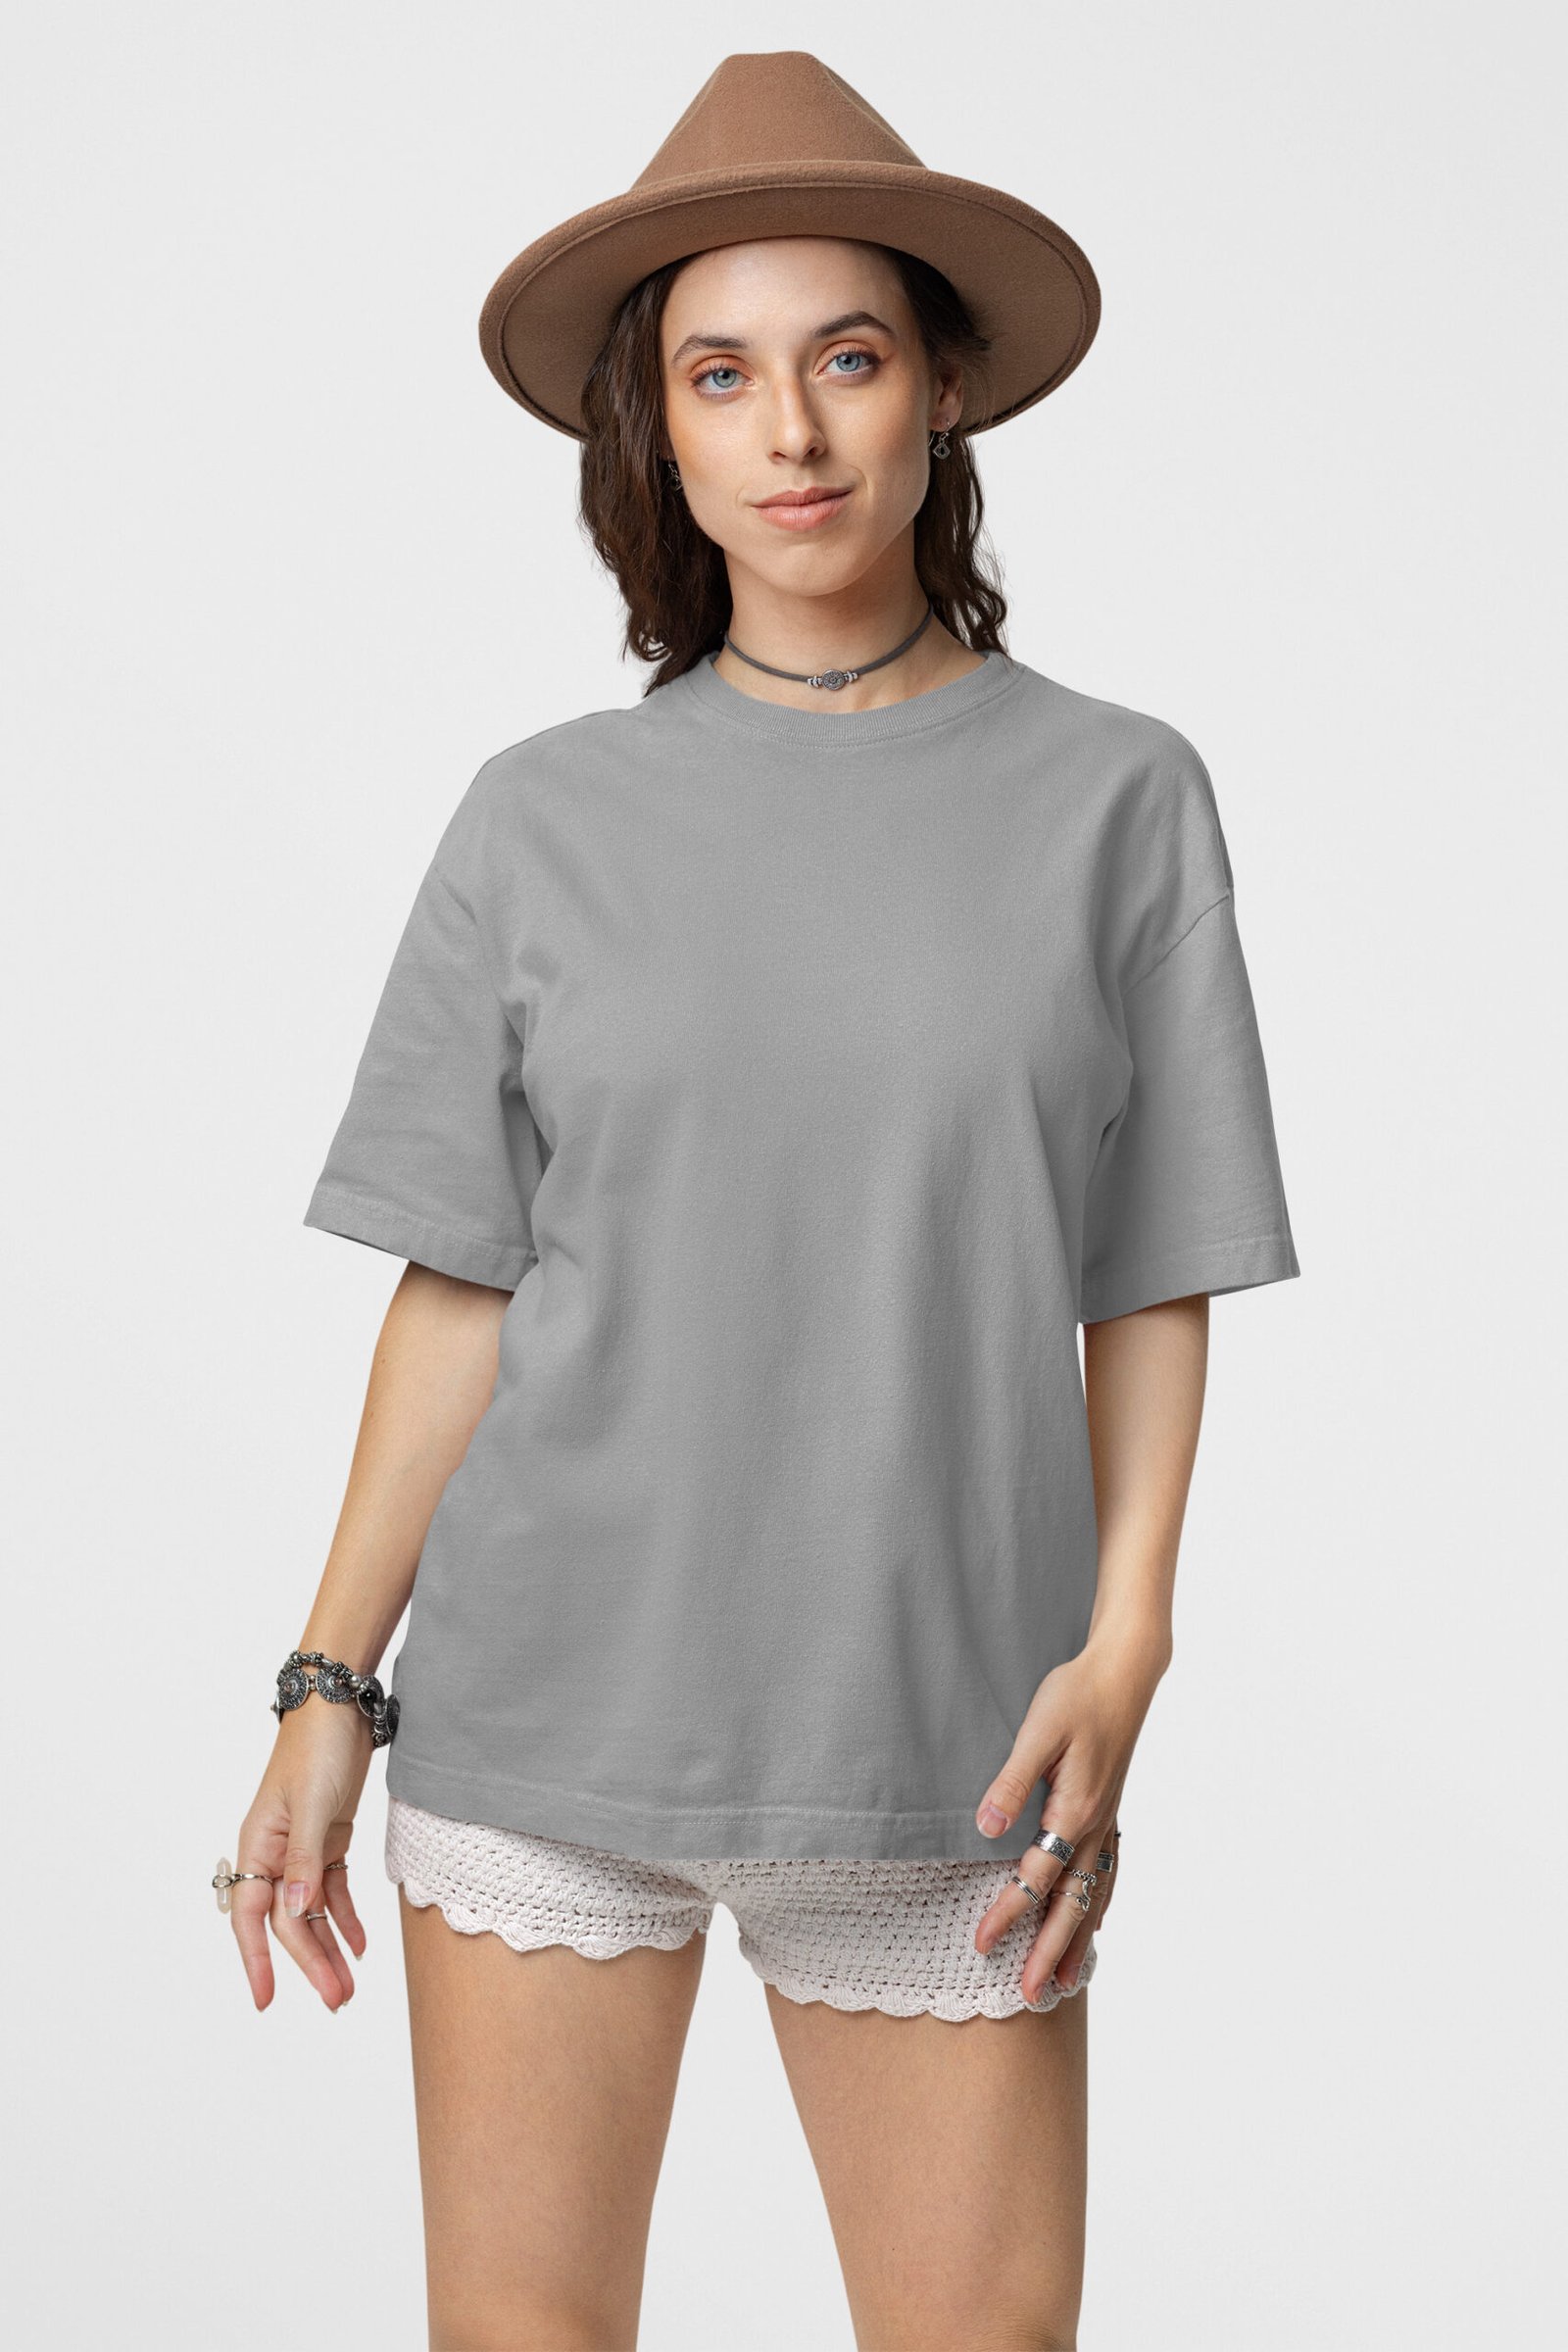 Moon Grey Solid T-Shirt by Wayward Wayz - Front